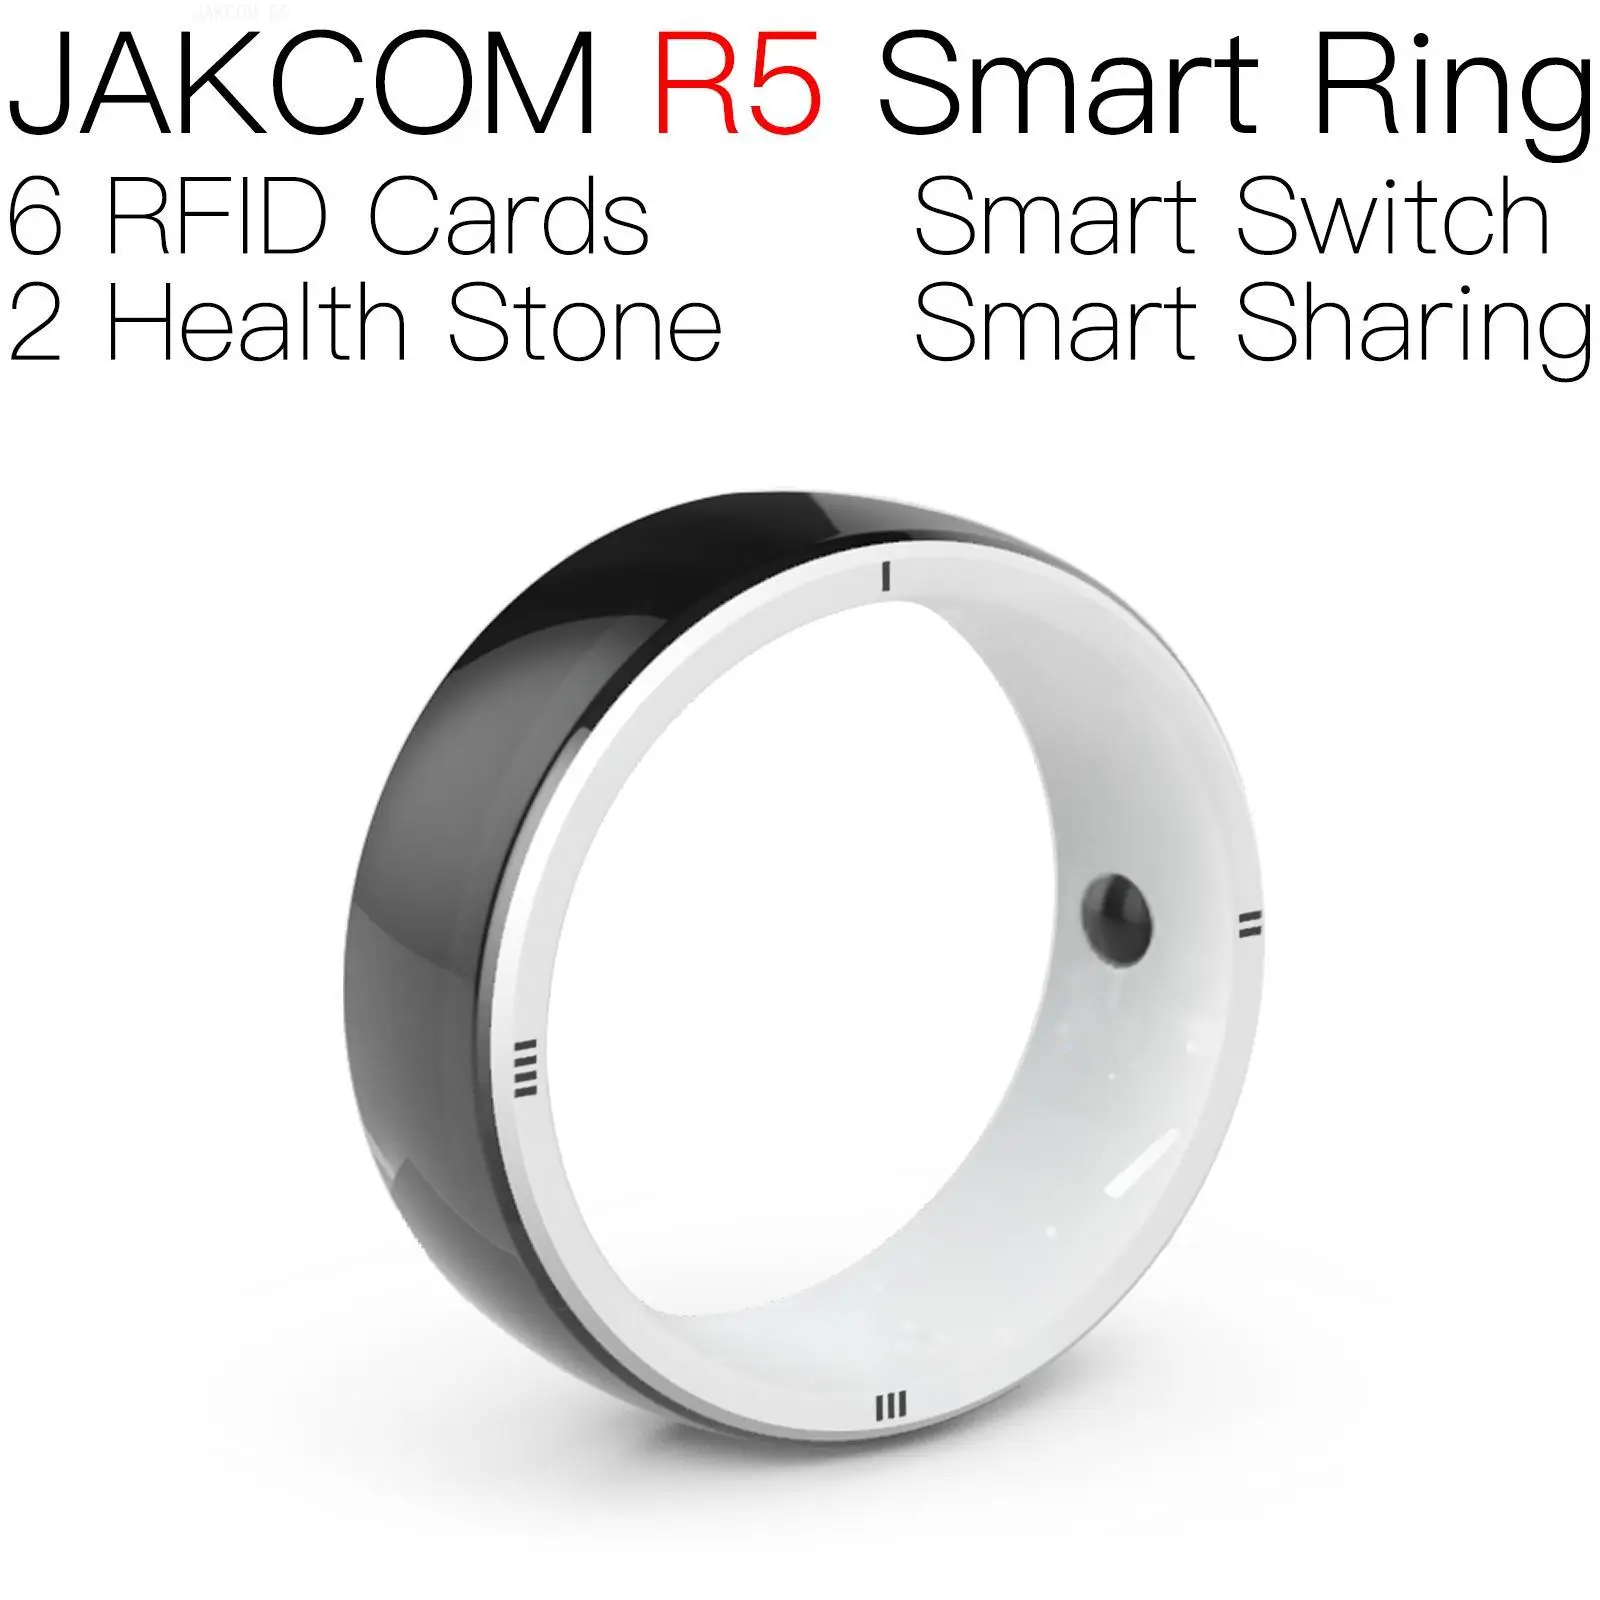 

JAKCOM R5 Smart Ring Newer than band 3 luminaria ewelink switch drag nano 6 global version r4 card